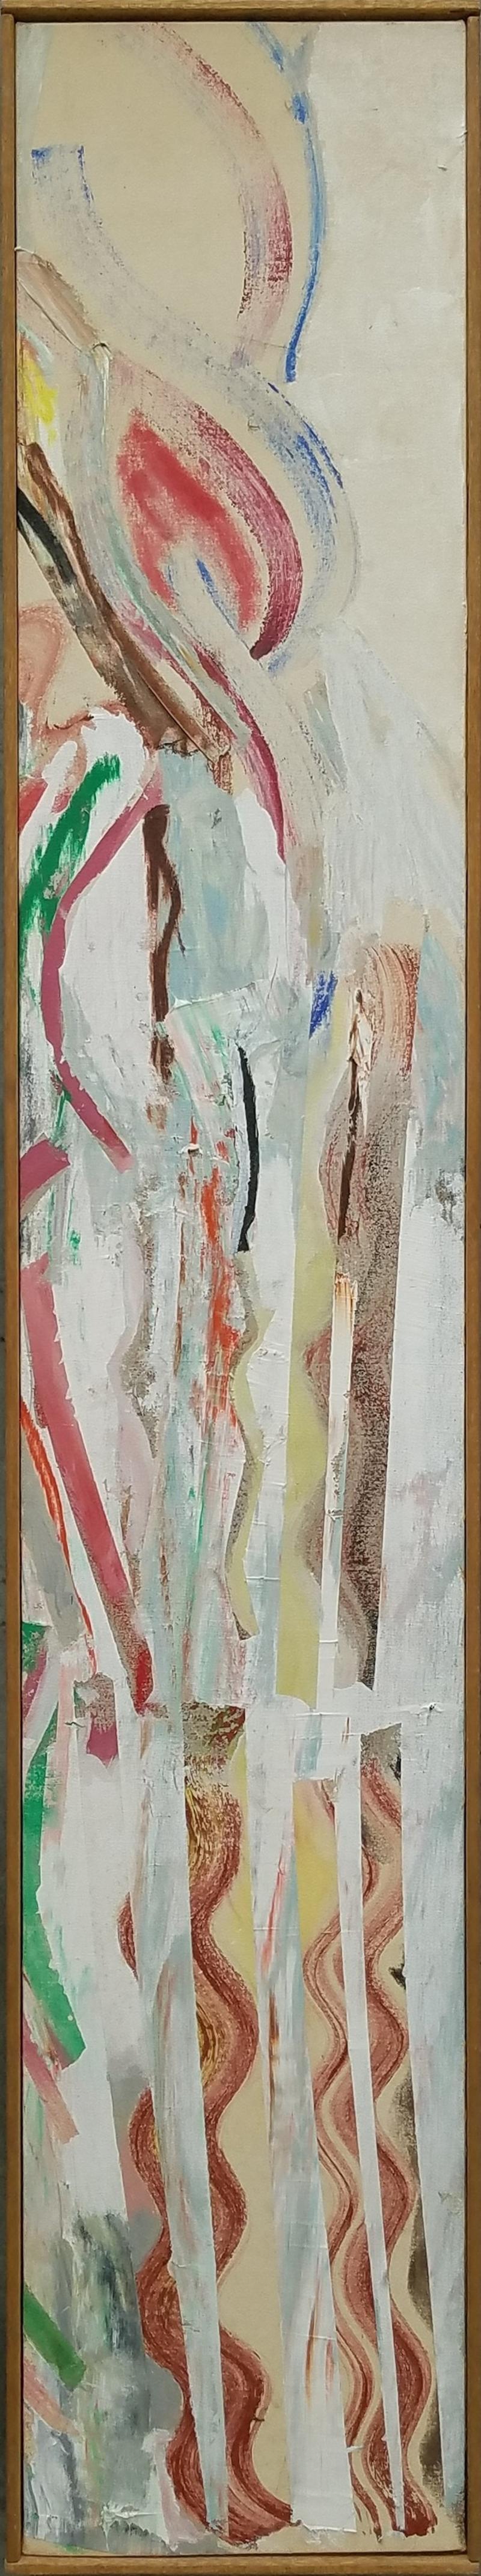 « Speedy Run n°1 », Susan Tunick, longue peinture expressionniste abstraite